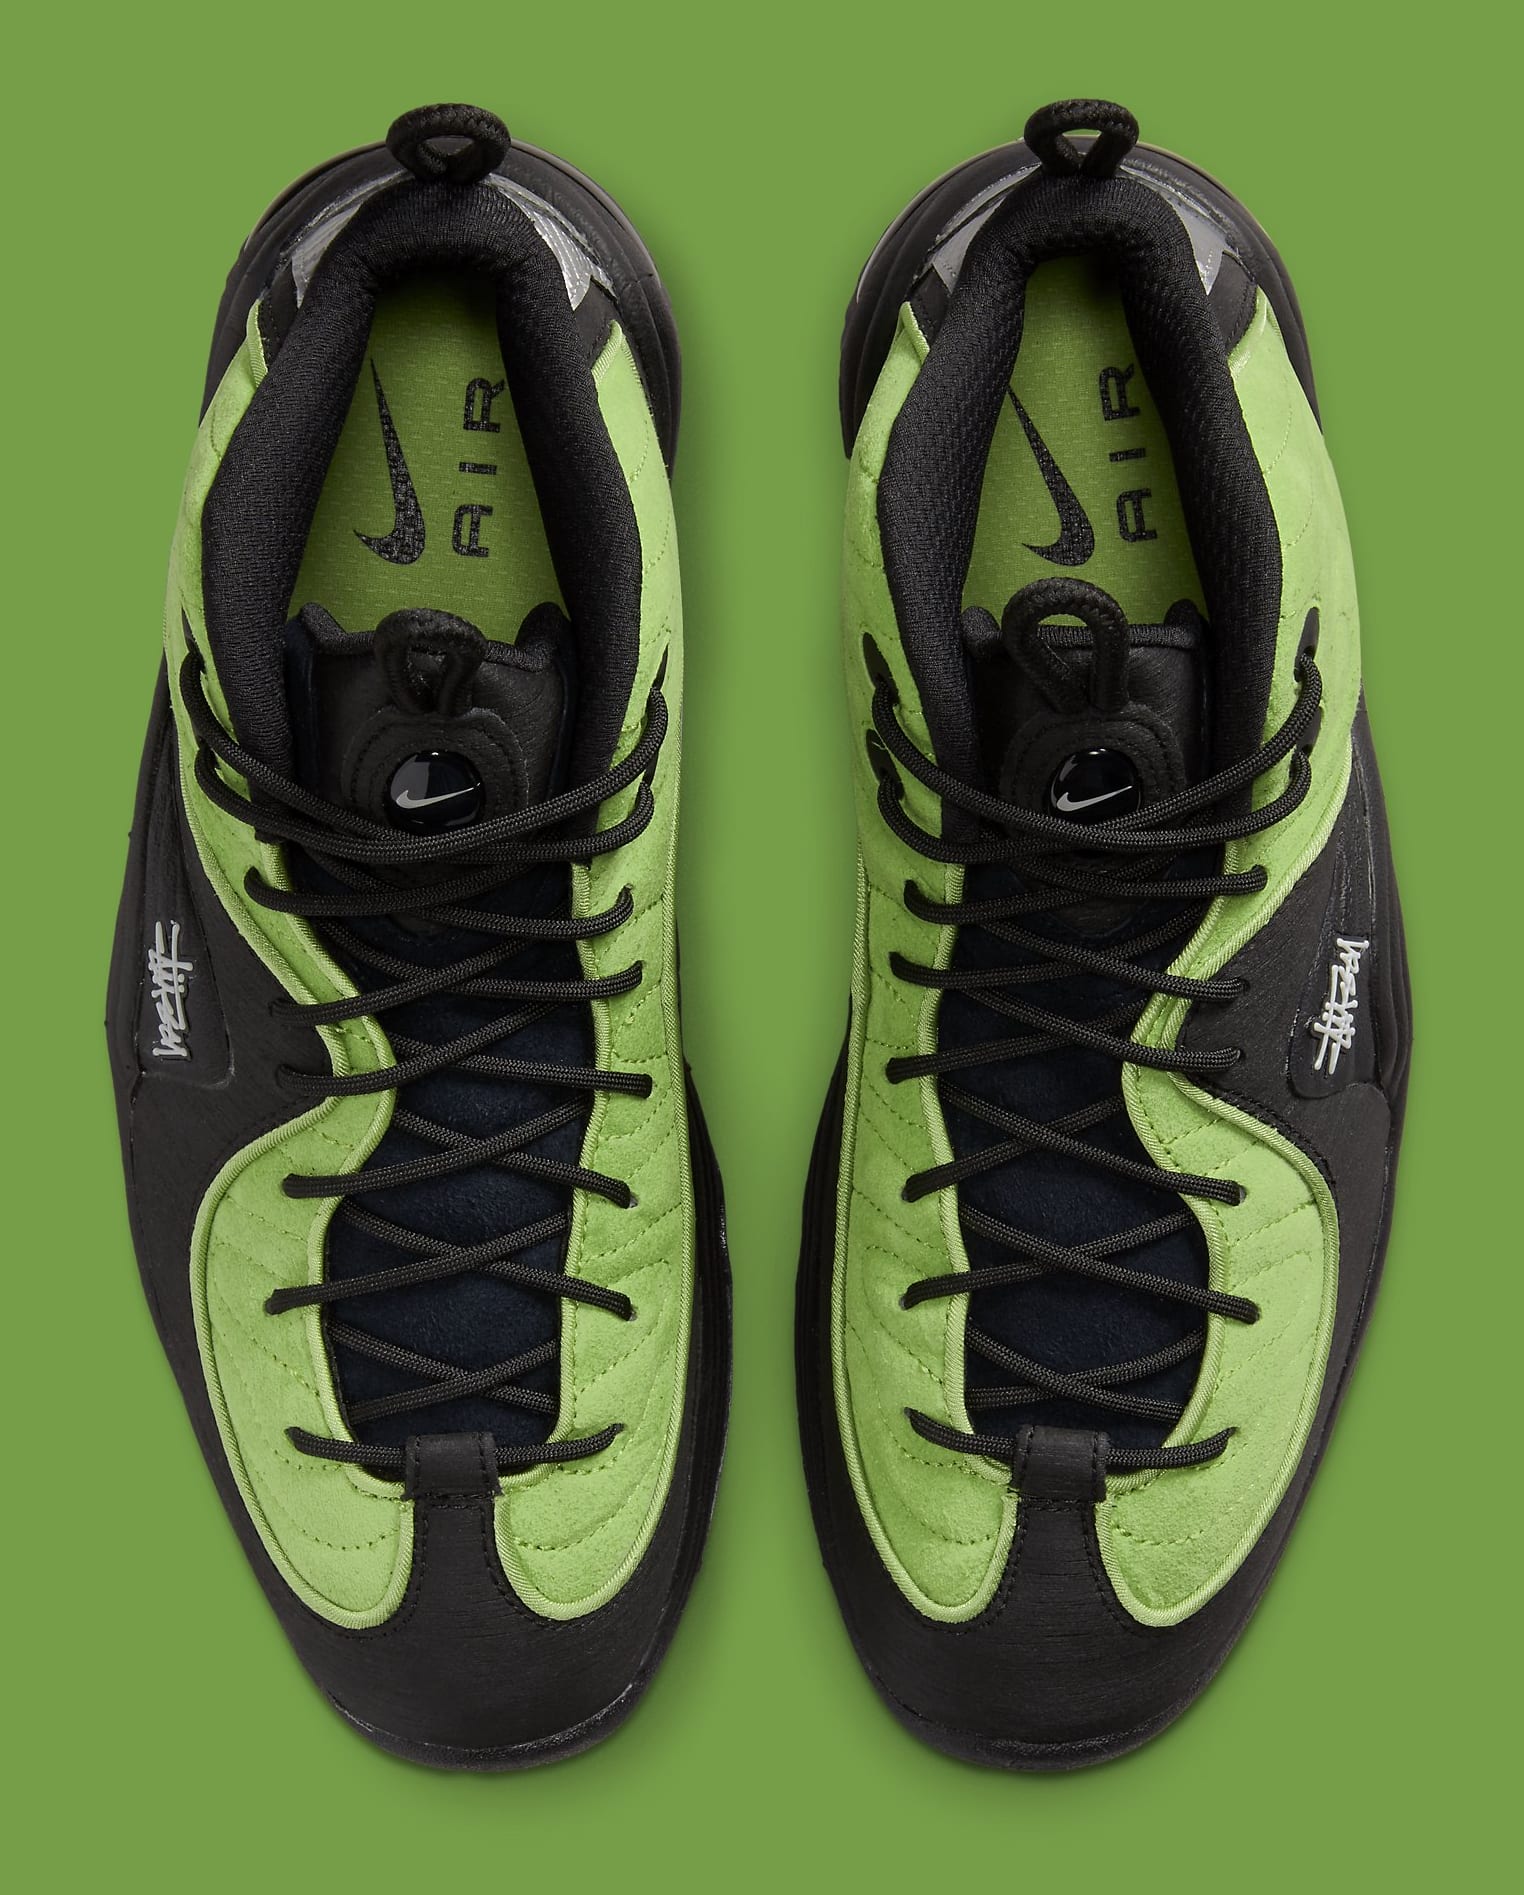 Stussy x Nike Air Penny 2 Black/Green DX6933 300 Top